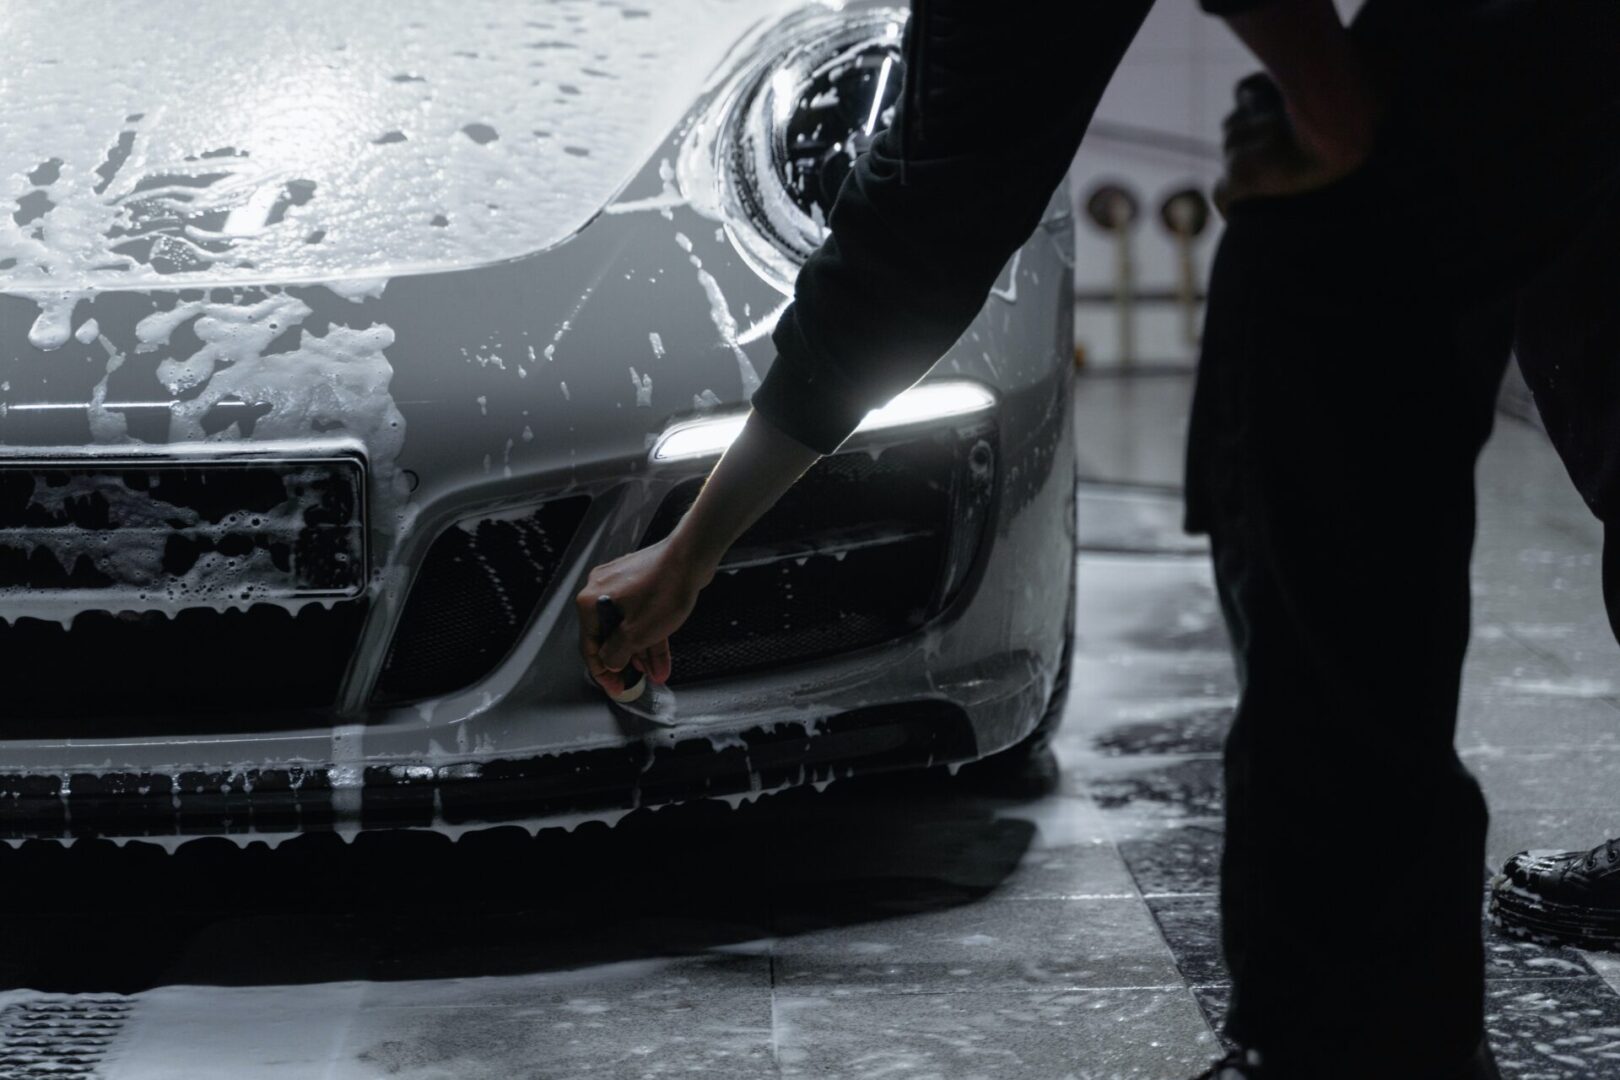 A person washing a car in the rain.